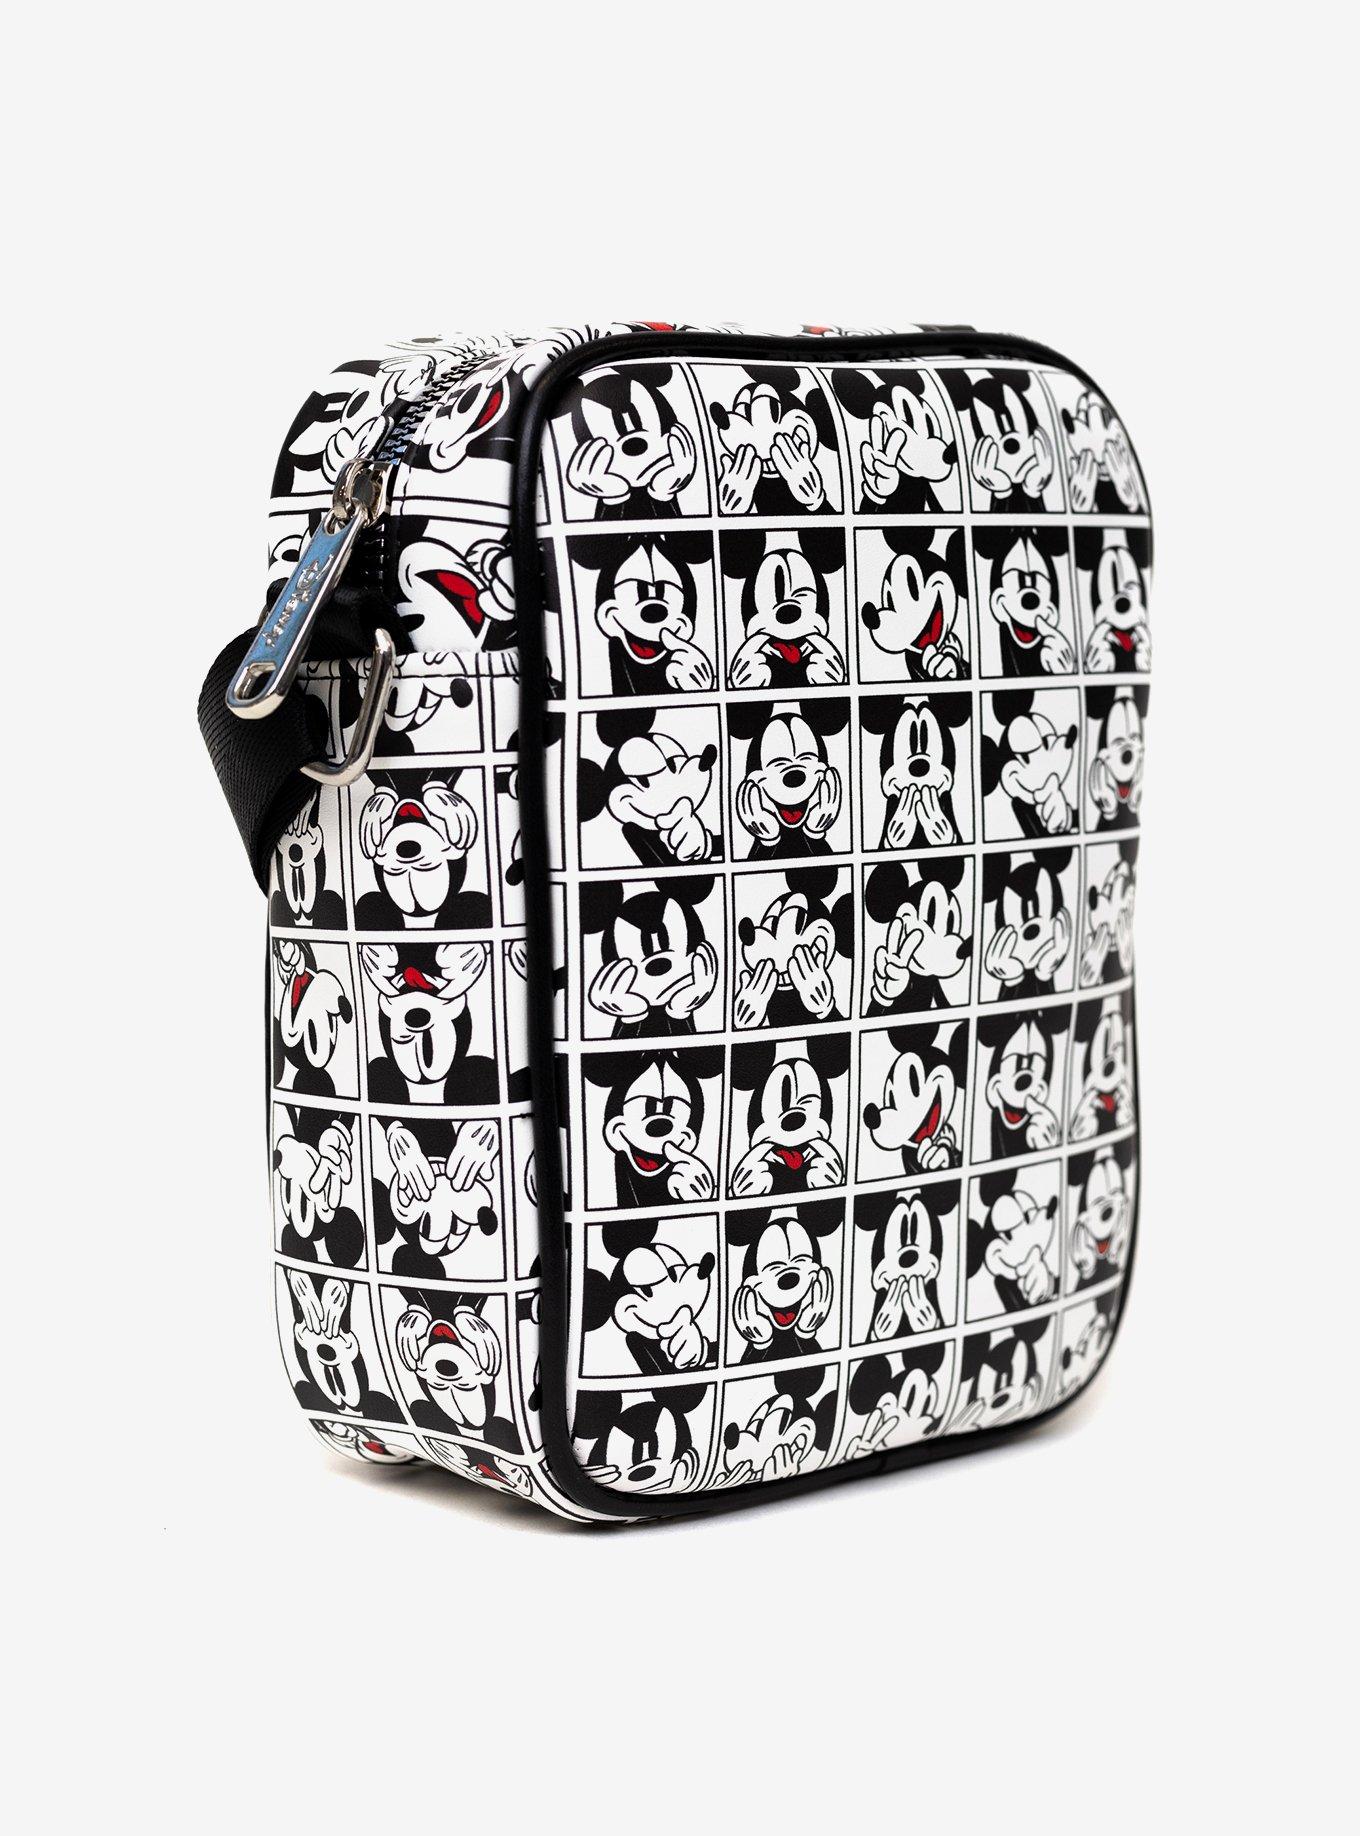 Disney Mickey Mouse Expression Blocks White Black Crossbody Bag